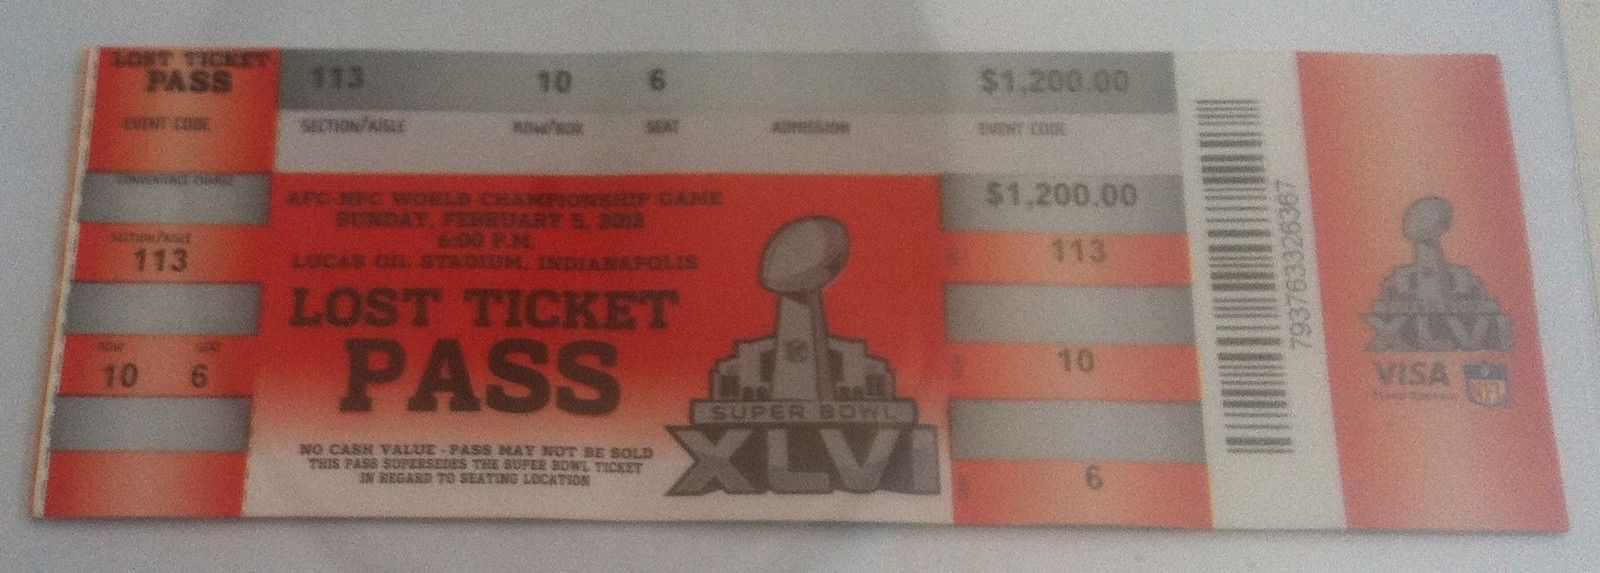 Super Bowl XLVI       Pass